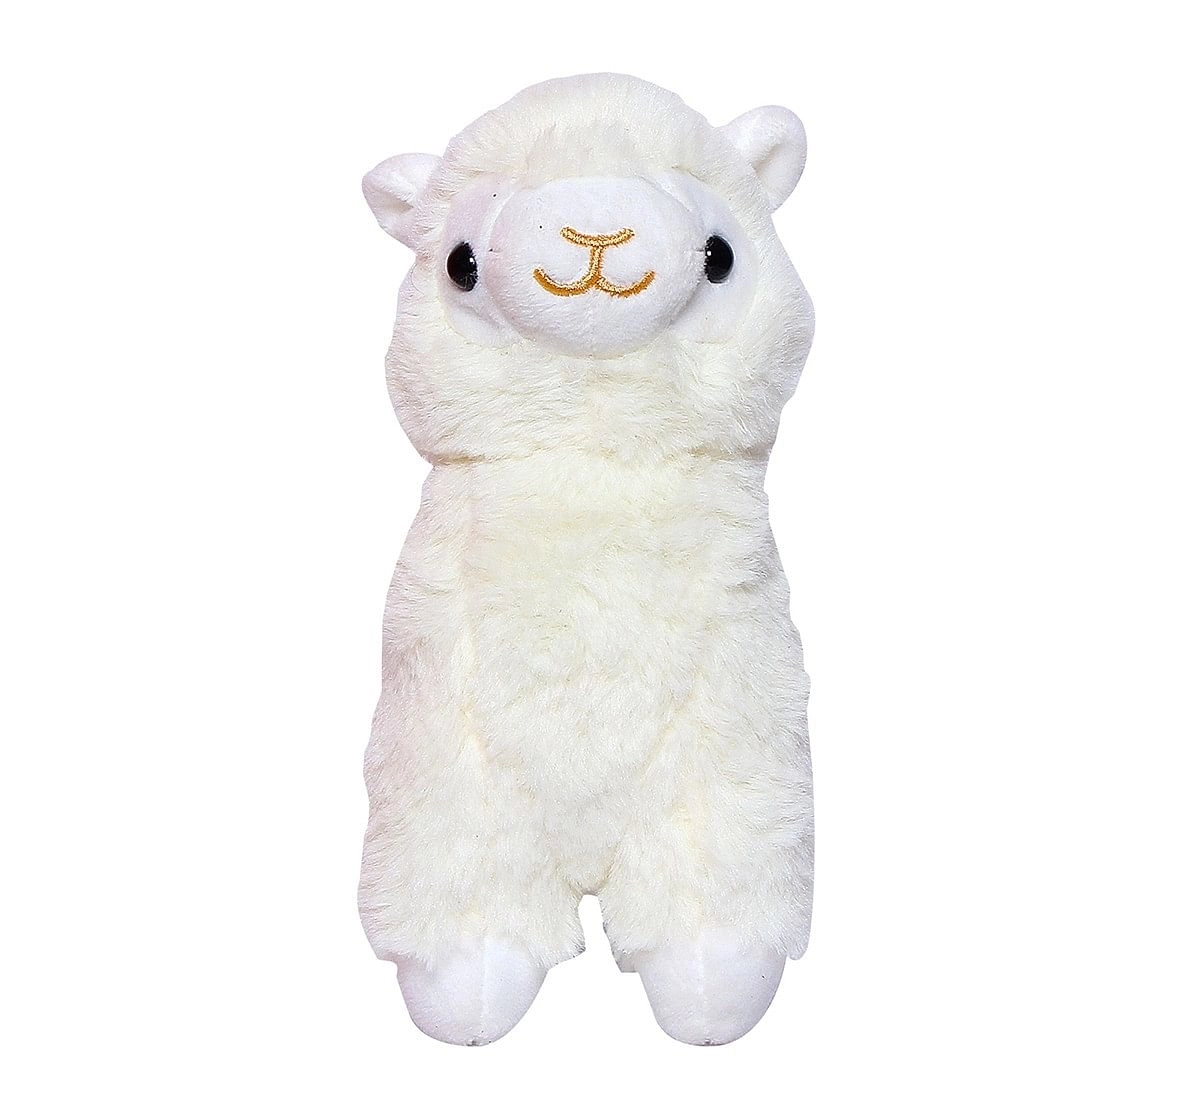 Pikmi Pops Llama Assorted Quirky Soft Toys for Girls age 5Y+ - 21 Cm 